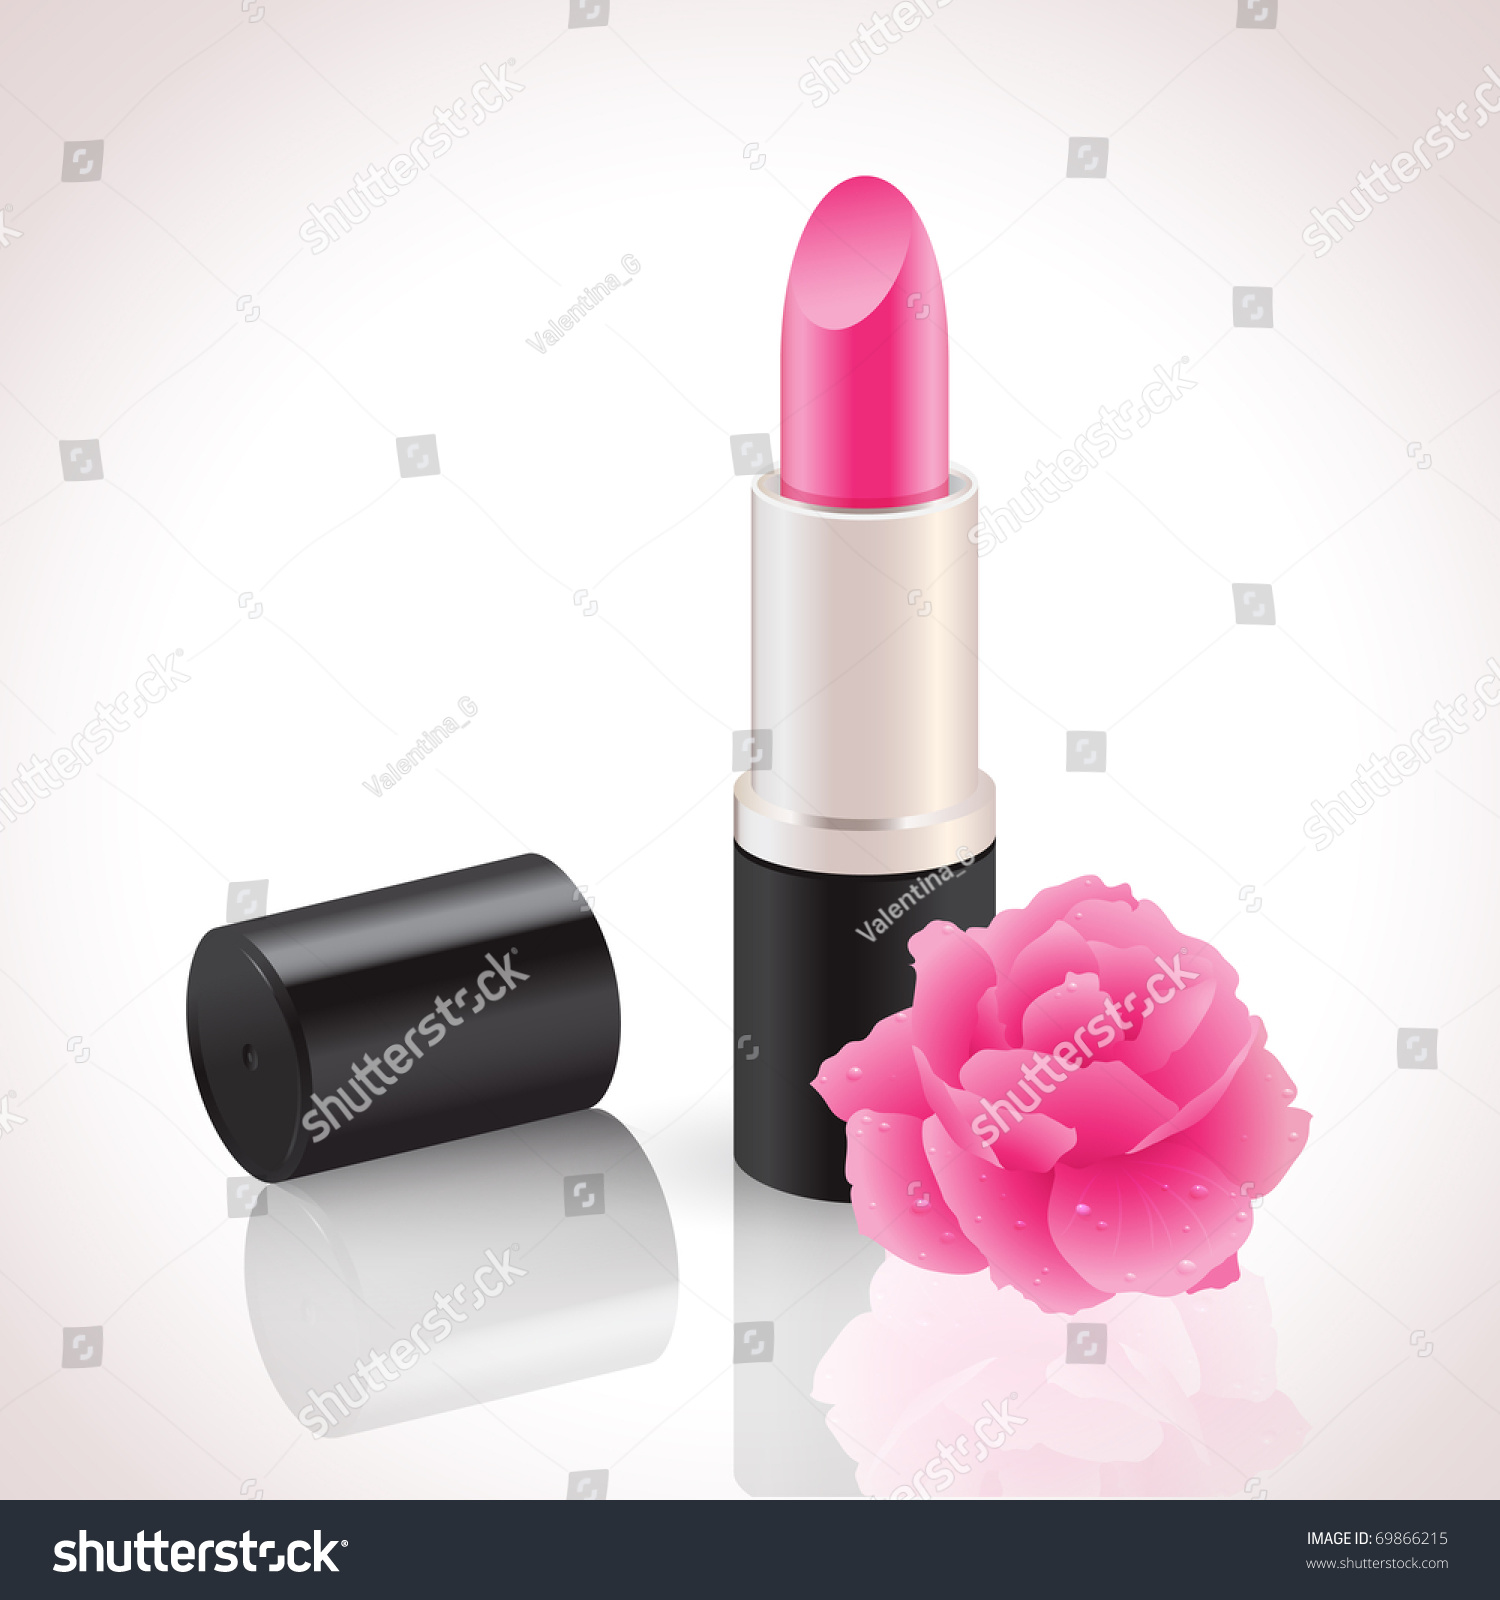 Pink Lipstick Rose Vector Illustration Eps Stock Vector 69866215 ...